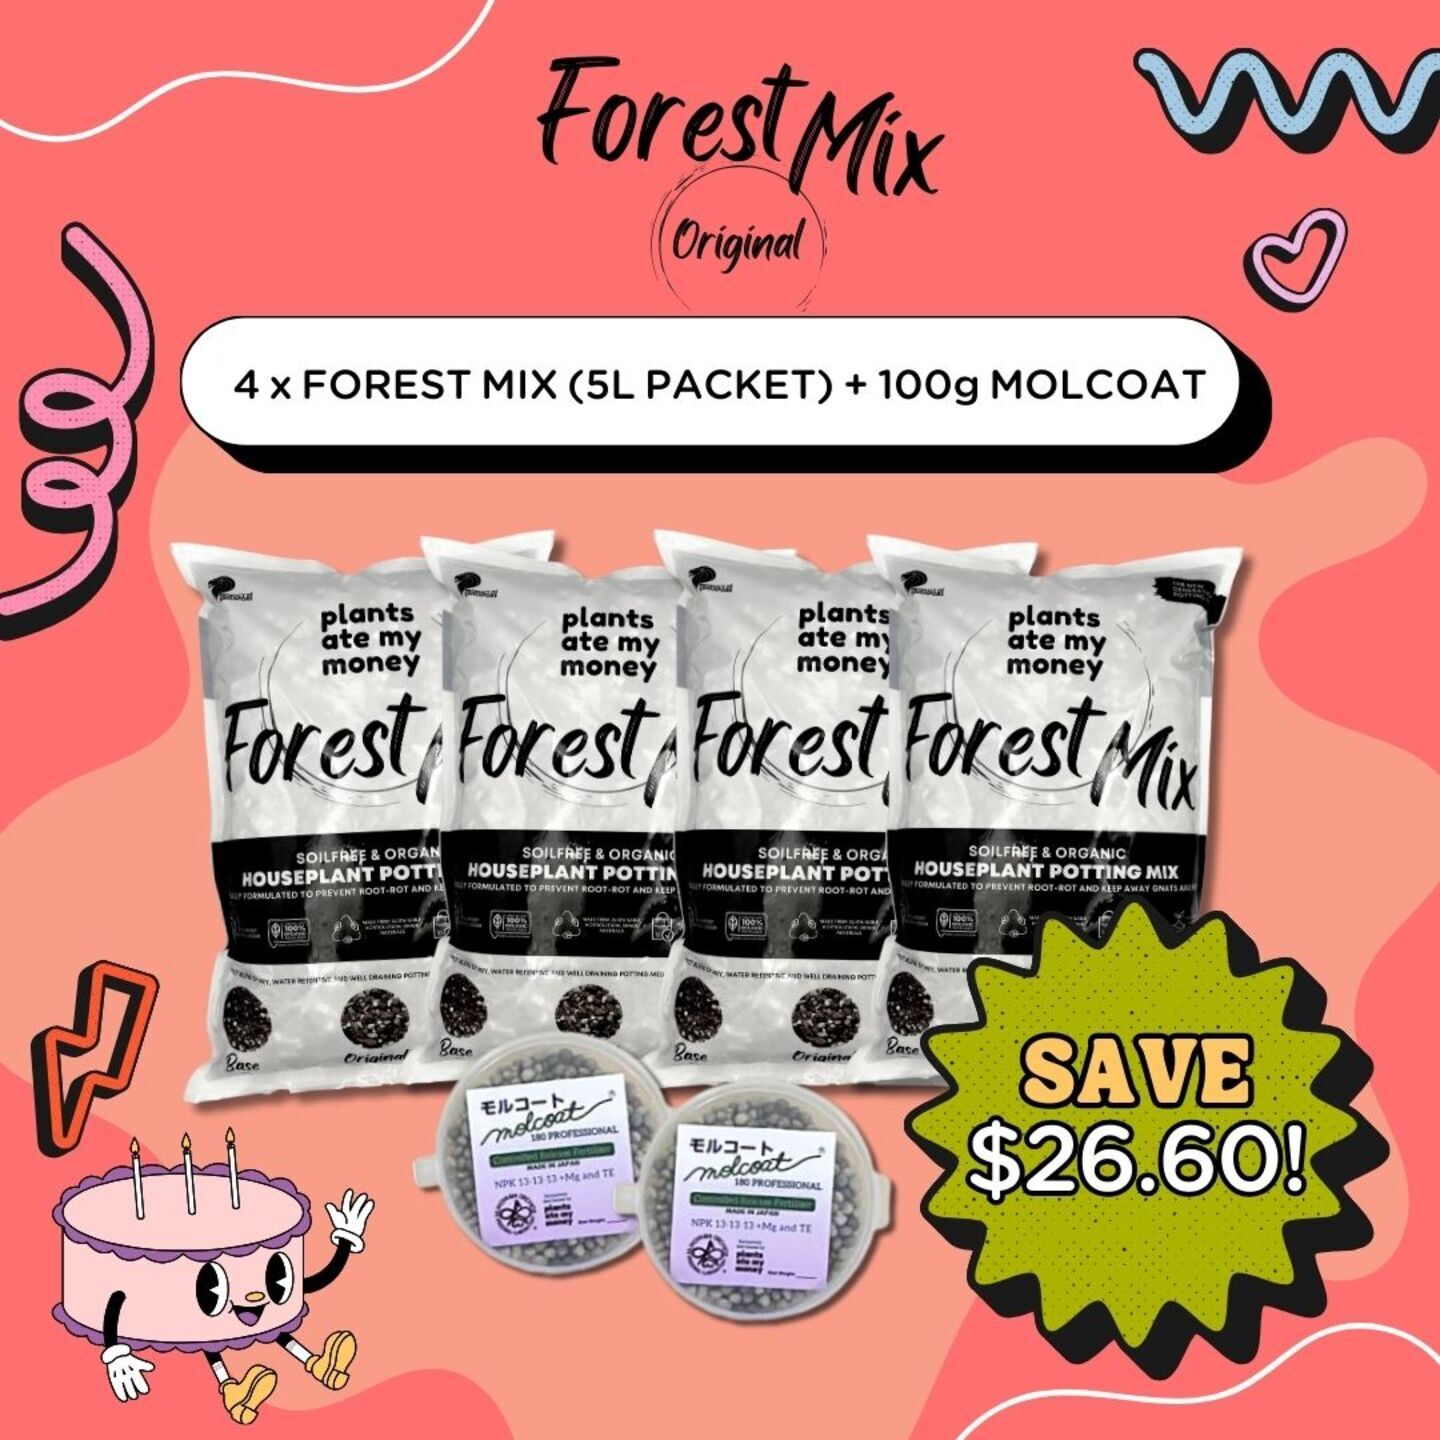 4 x FOREST MIX ORIGINAL 5L PACKET + 100g MOLCOAT